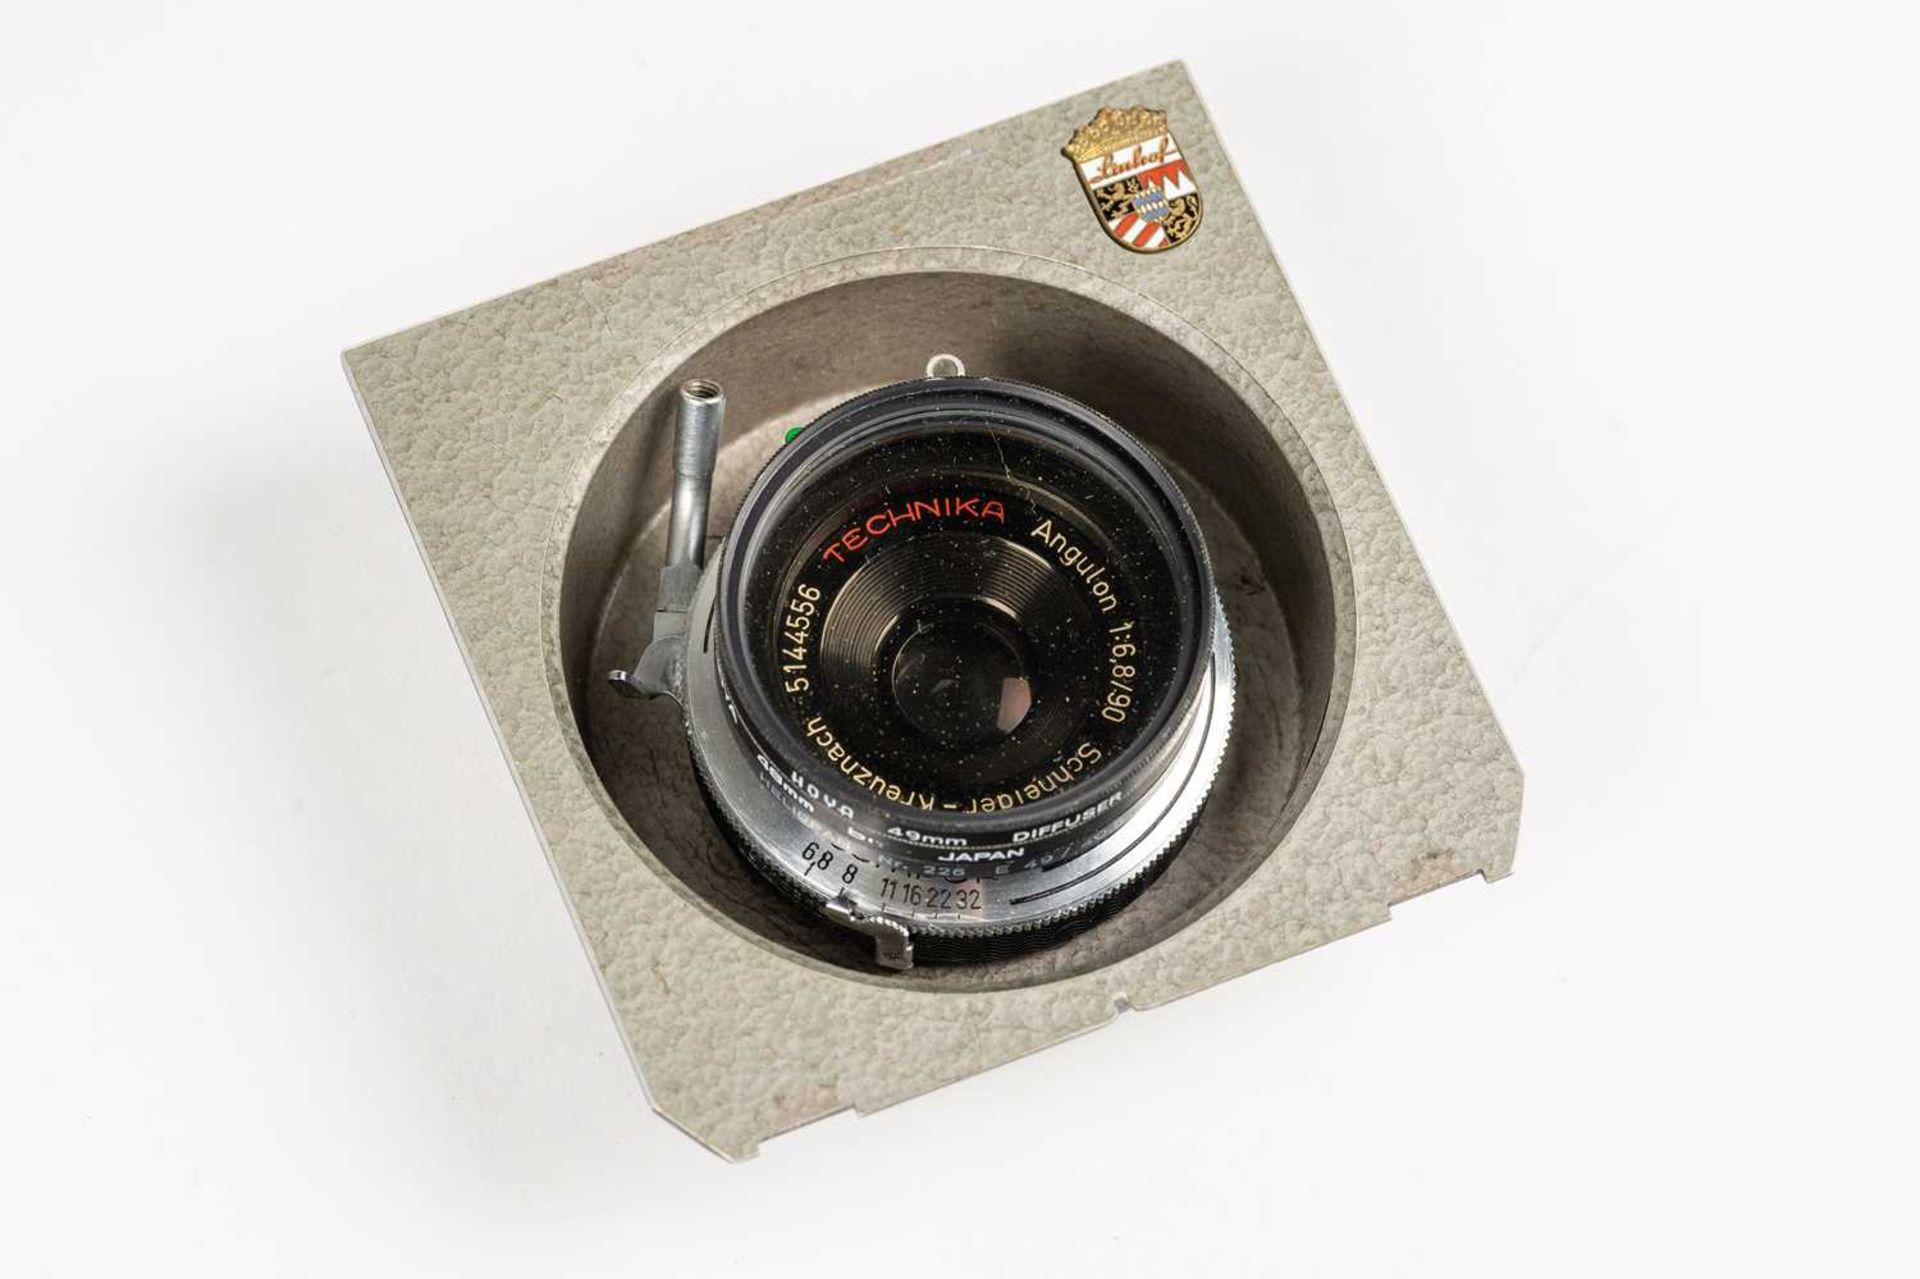 A Linhof Technika V 5 x 4" plate camera, serial number 63532, with Schneider-Kreuznach Angulon 1:6, - Image 14 of 21